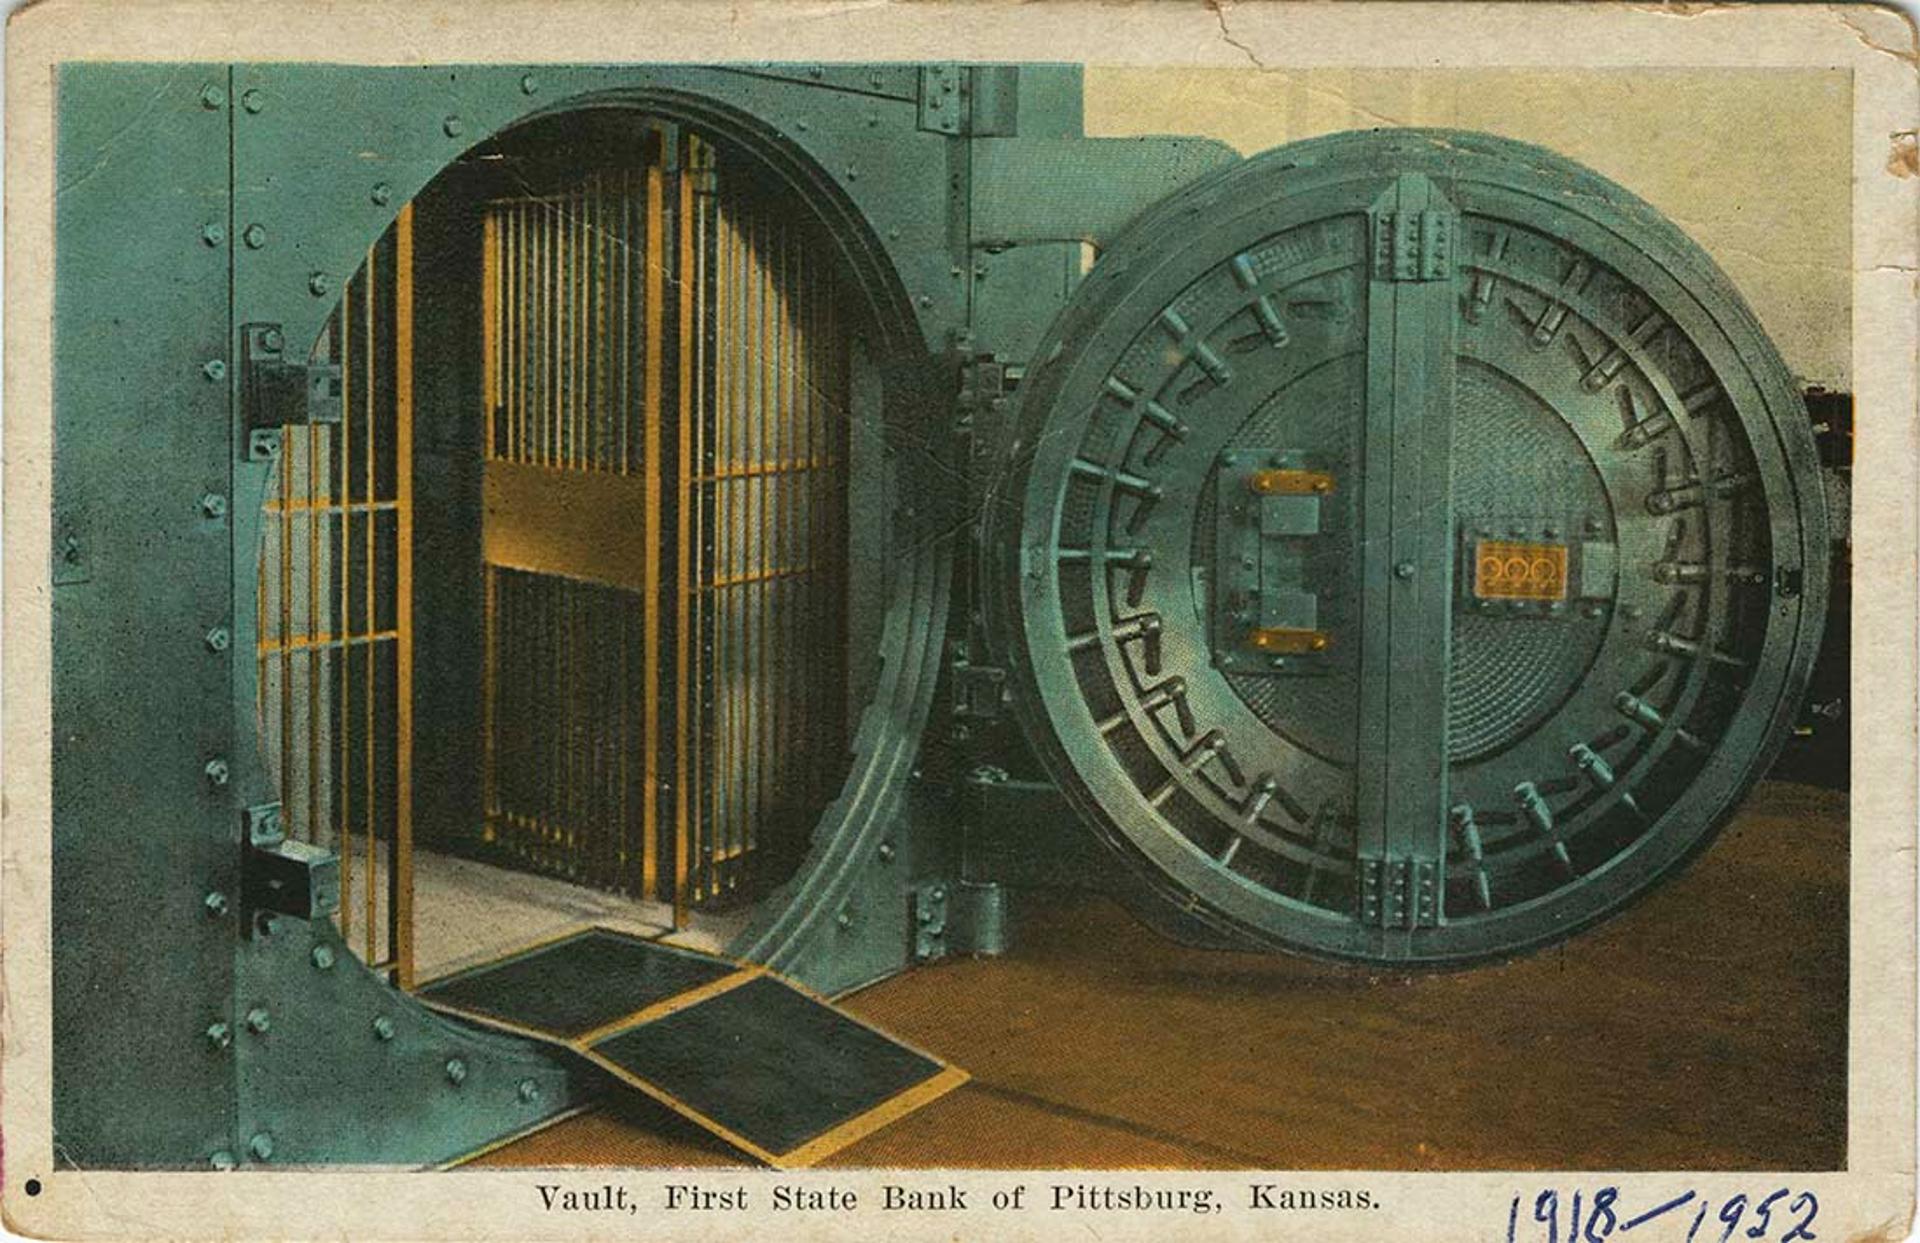 Antique photo of open vault door, with caption below reading: "Vault, First State Bank of Pittsburg, Kansas."